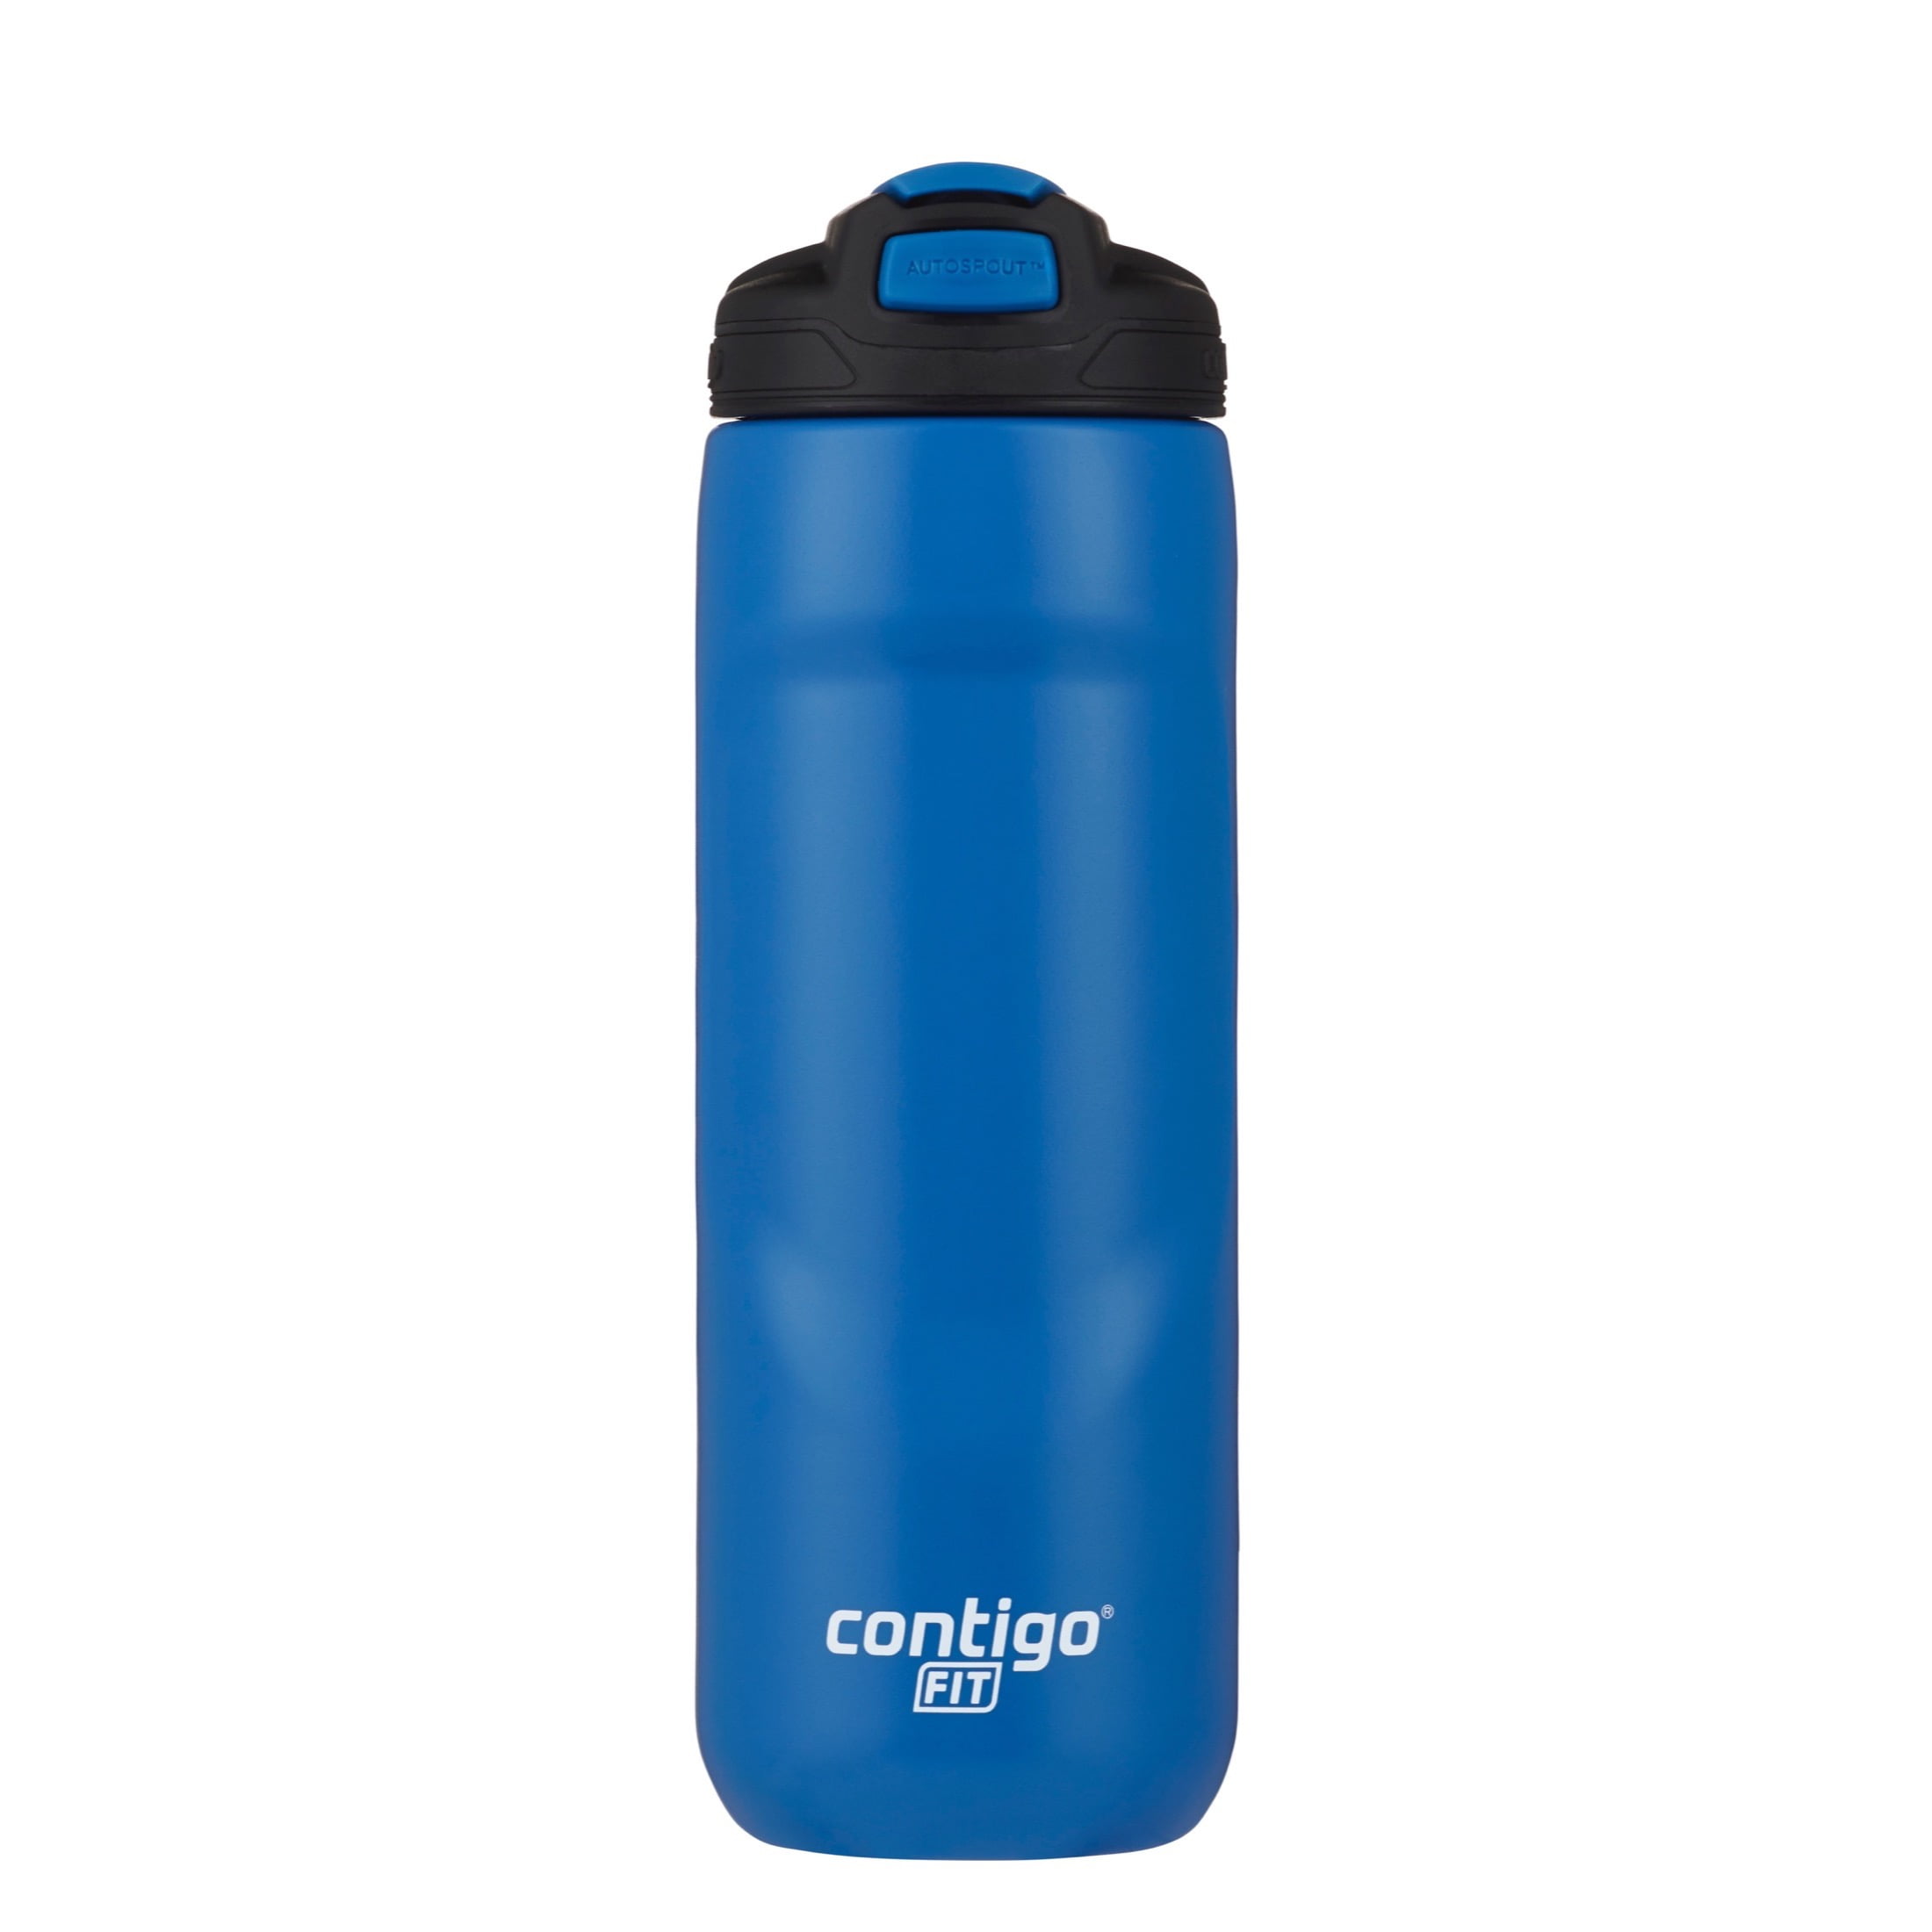 Contigo 24 oz Leak-Proof Lid Water Bottle with Autopop Jupiter (1